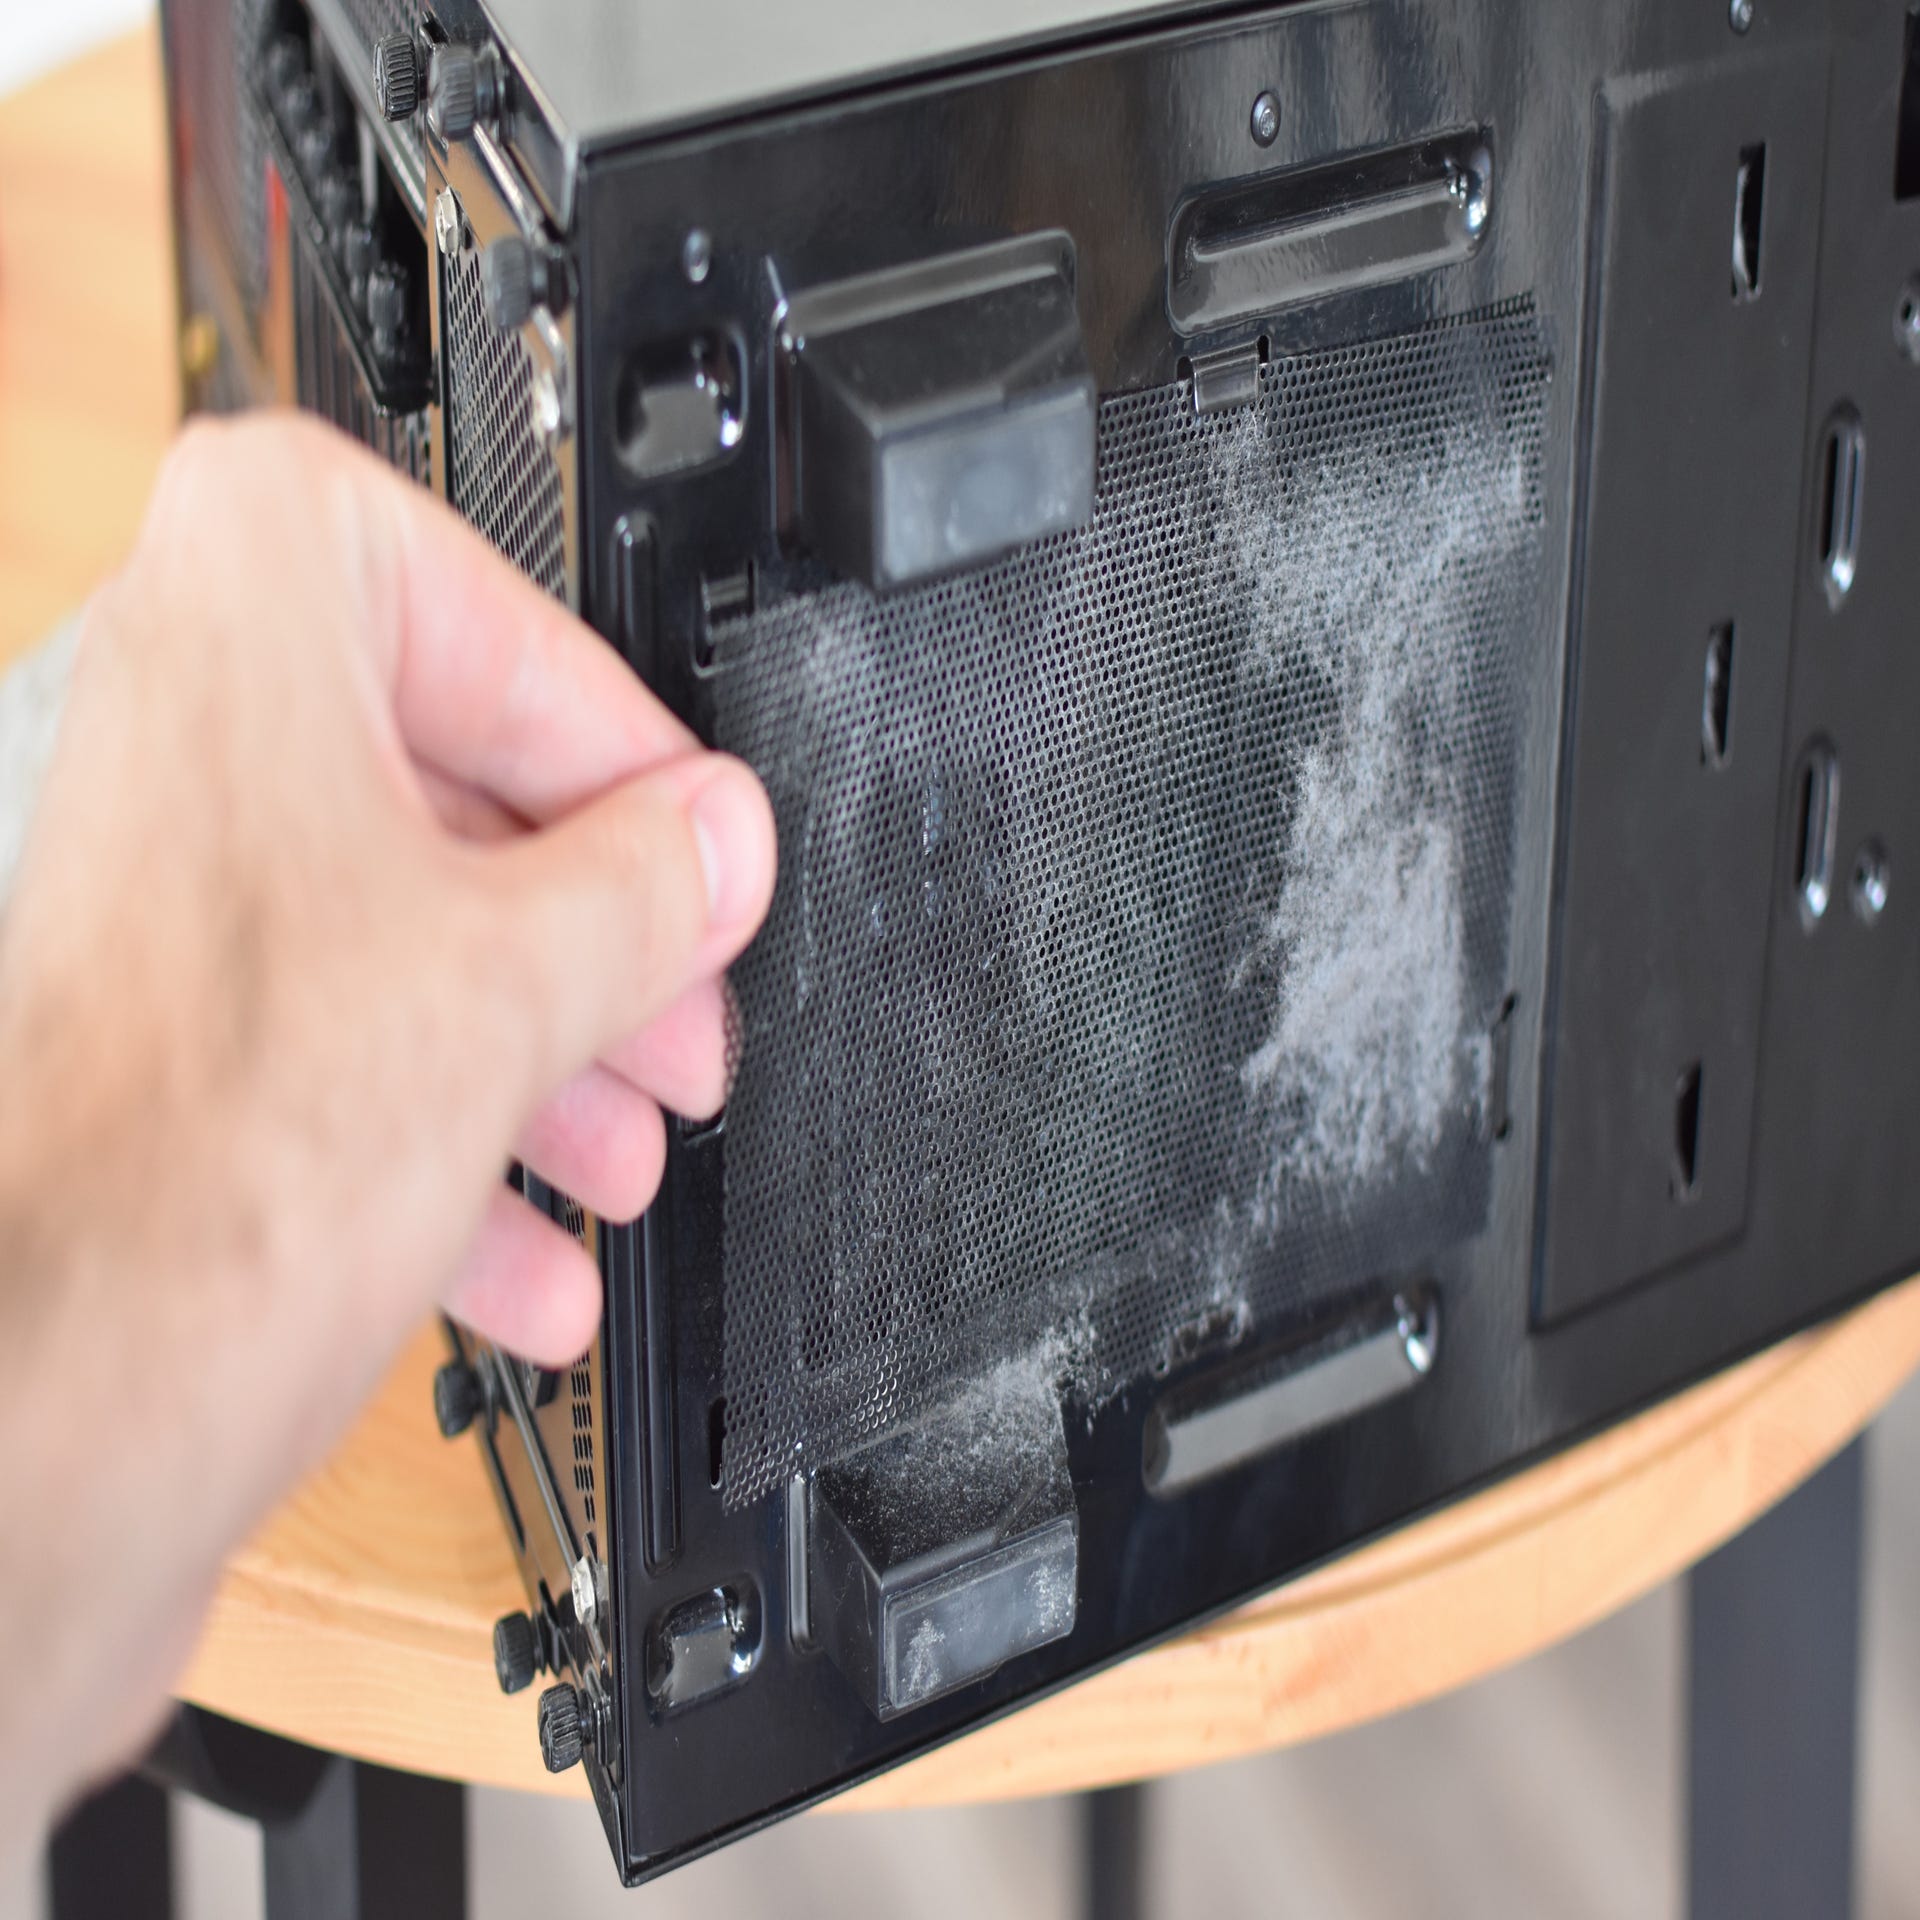 Smelten Smash welzijn How to clean your PC | Rock Paper Shotgun